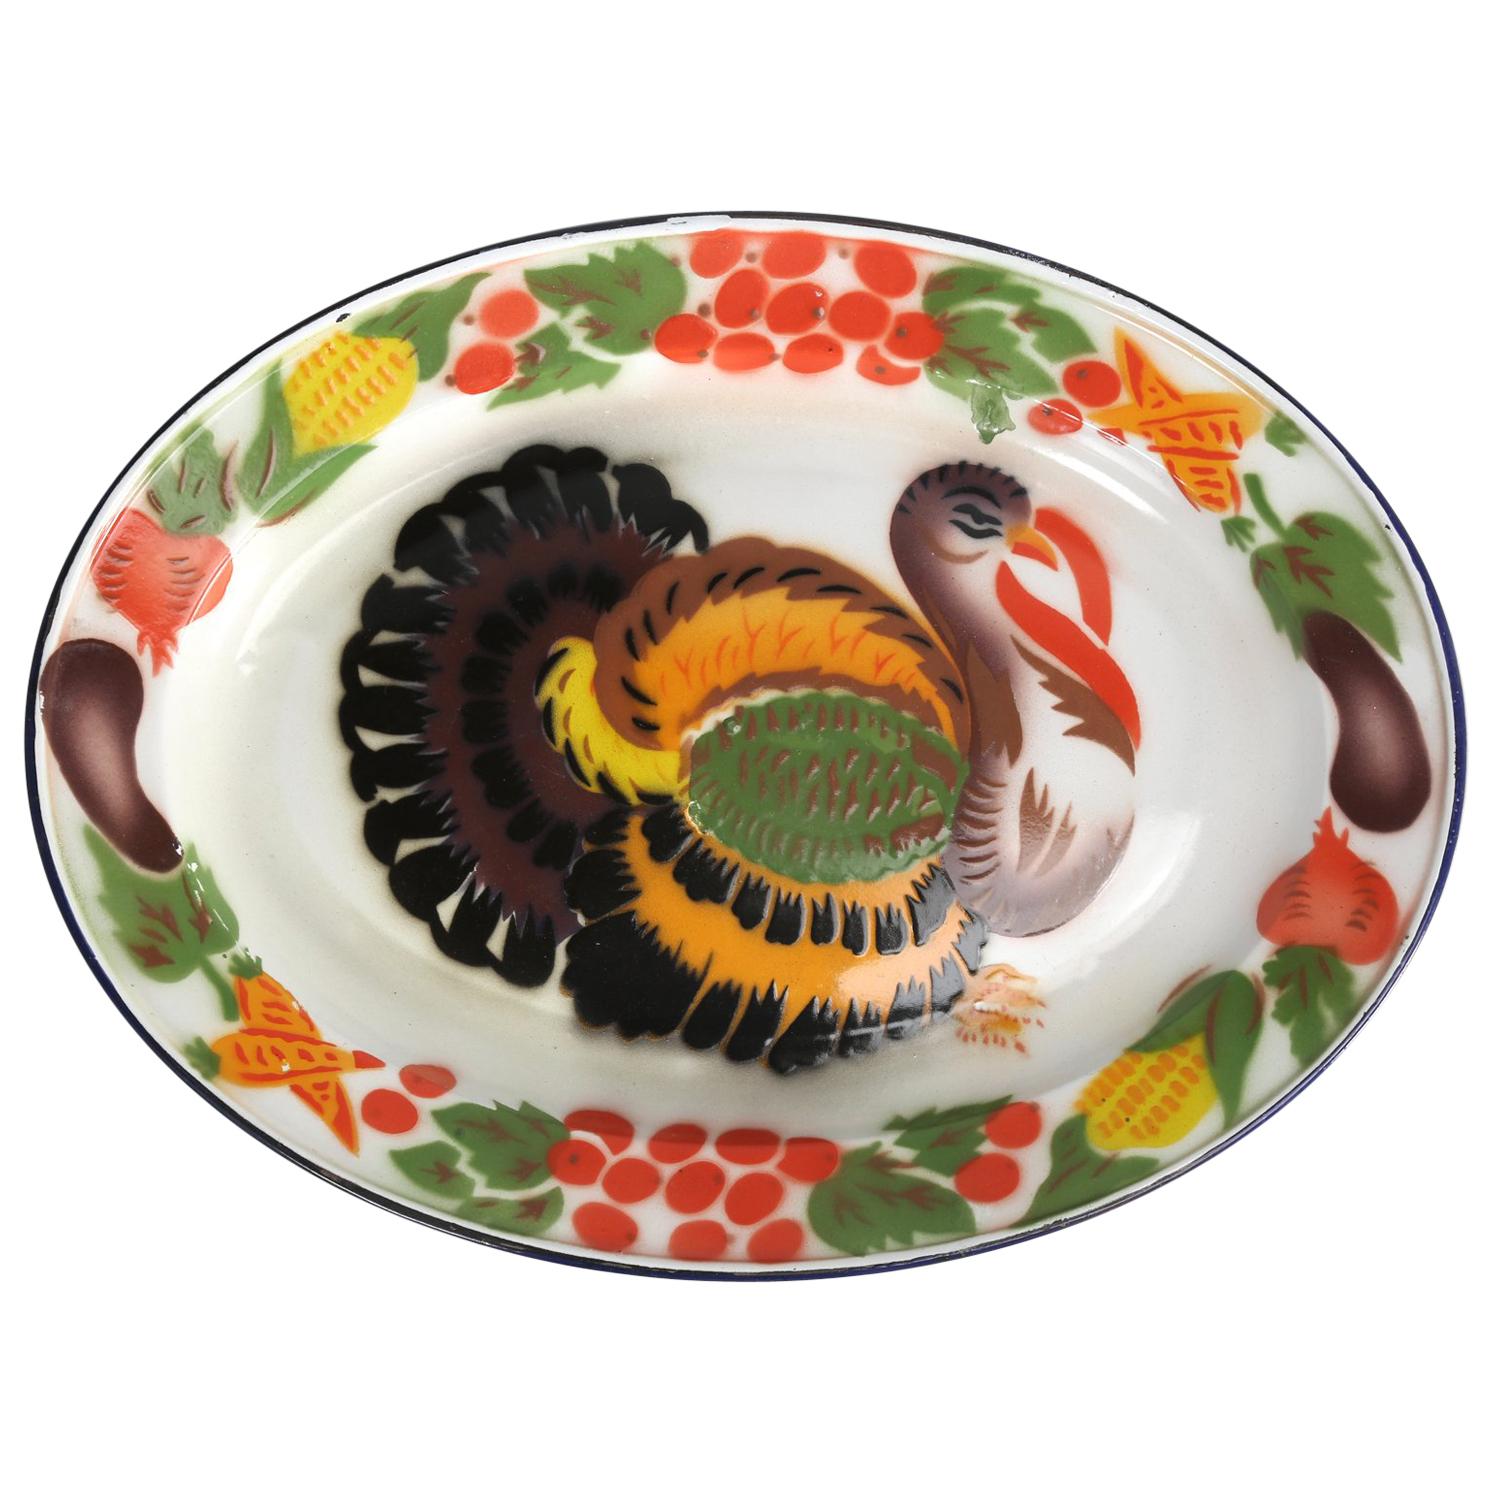 Turkey Platter in American Enamelware, circa 1950s